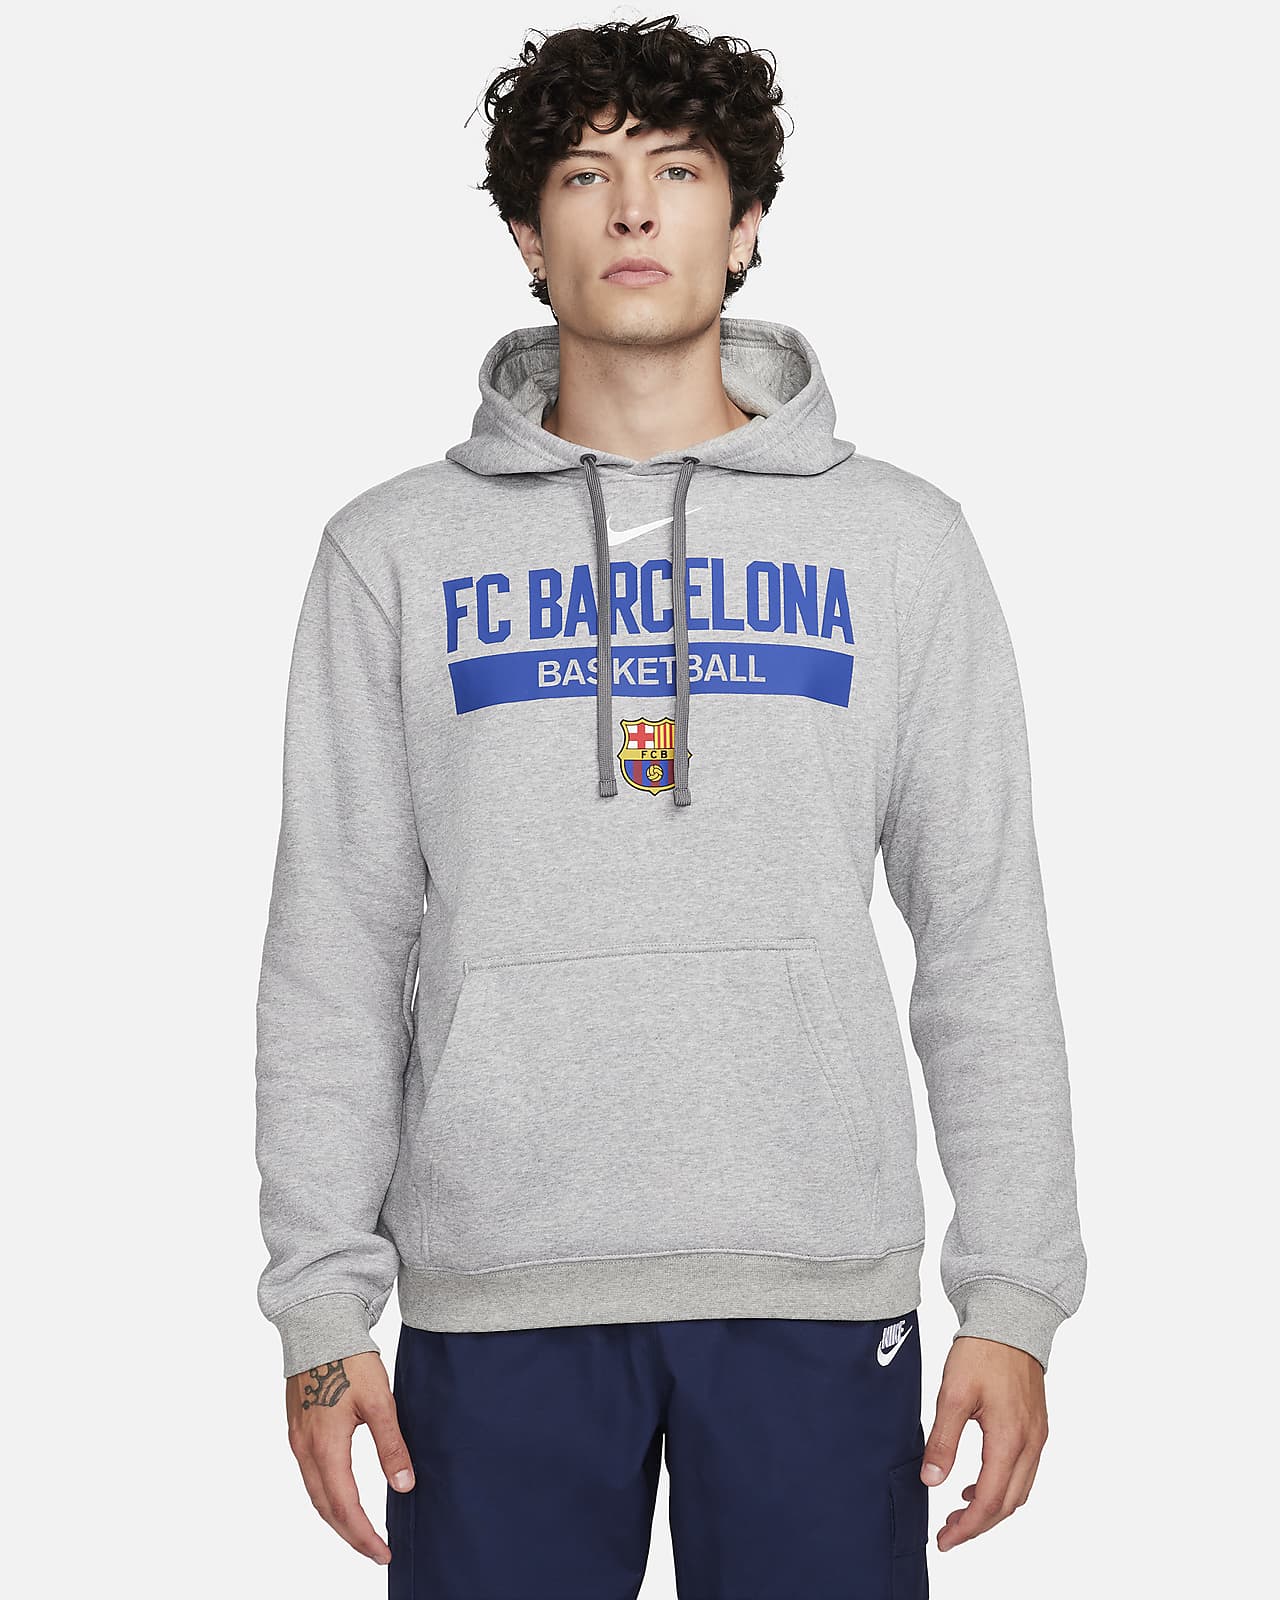 F.C. Barcelona Club Fleece Men's Nike Basketball Pullover Hoodie